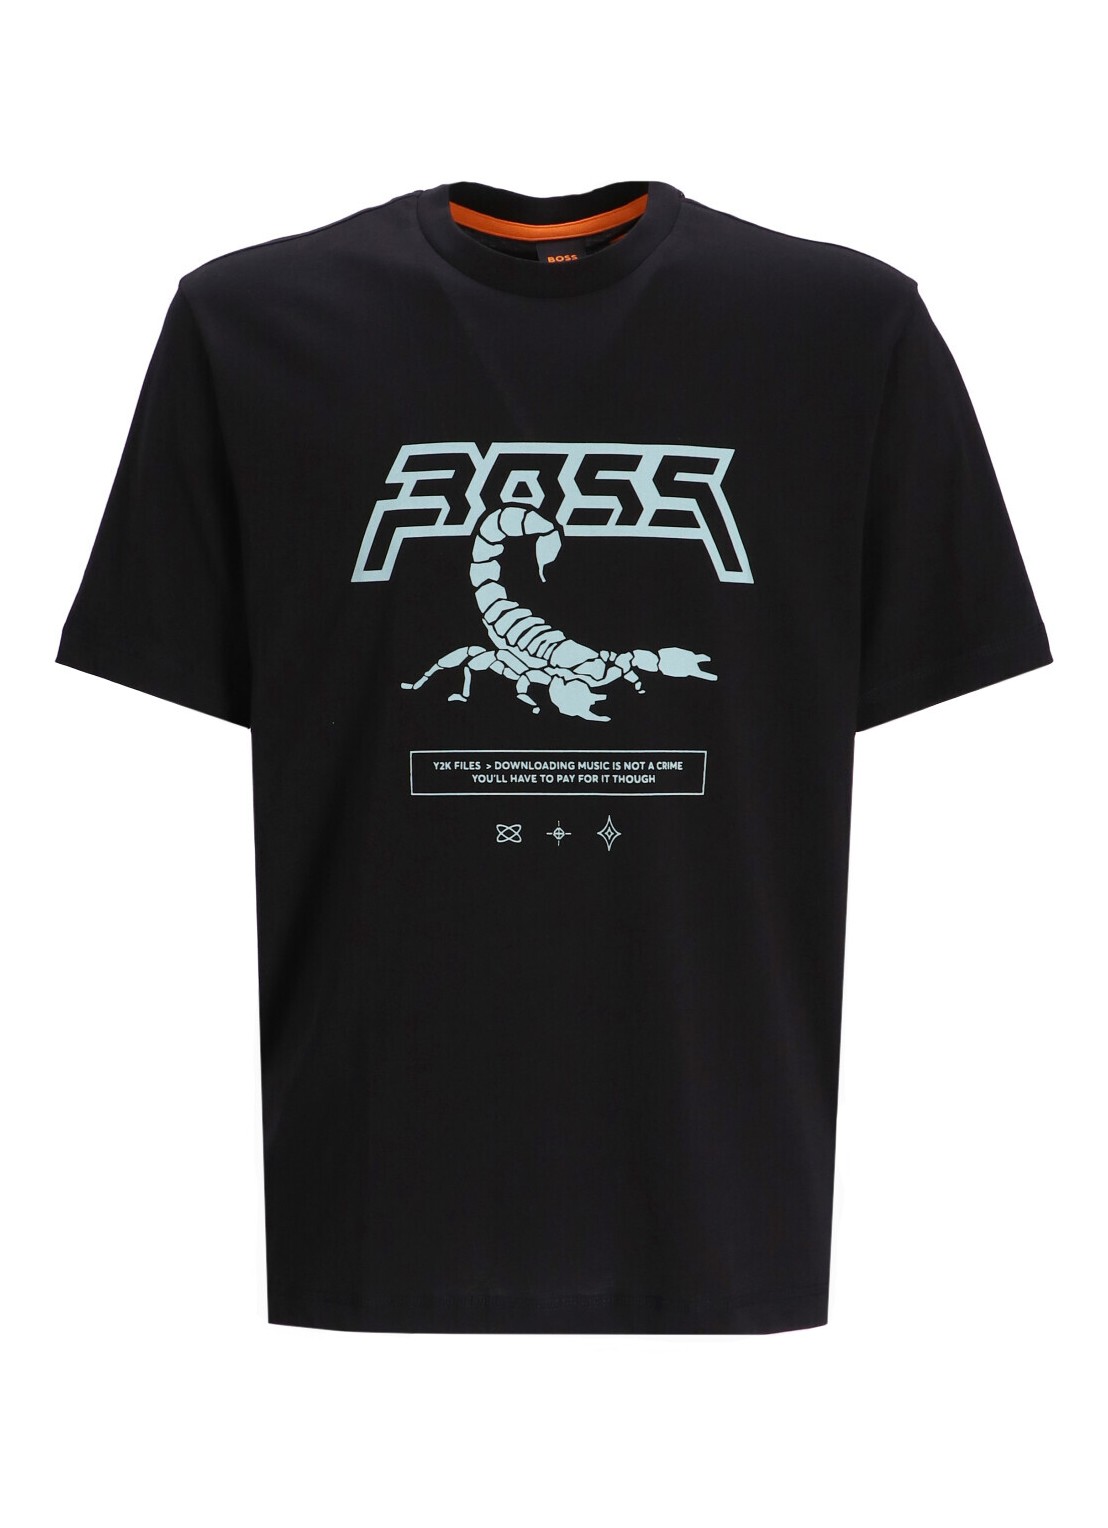 Camiseta boss t-shirt mantescorpion - 50510648 001 talla S
 